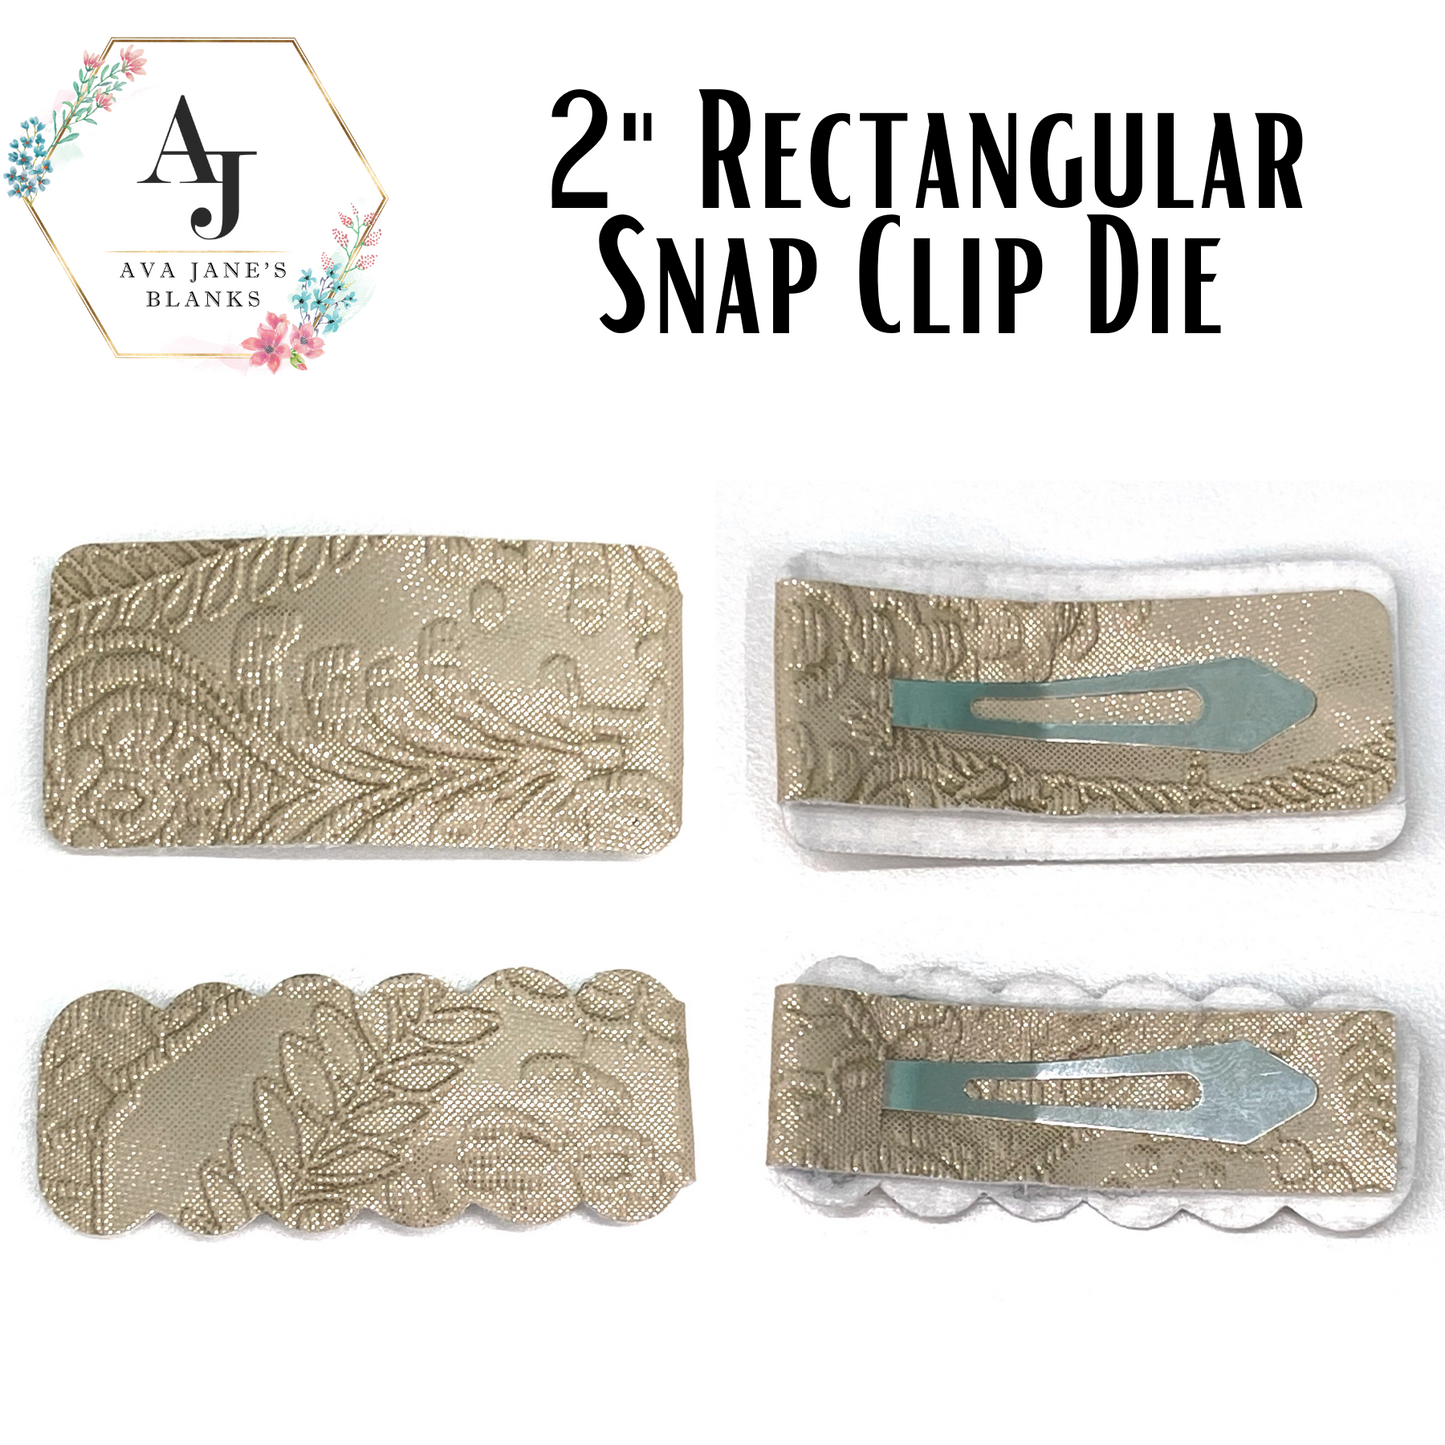 2" Rectangular Snap Clip Die